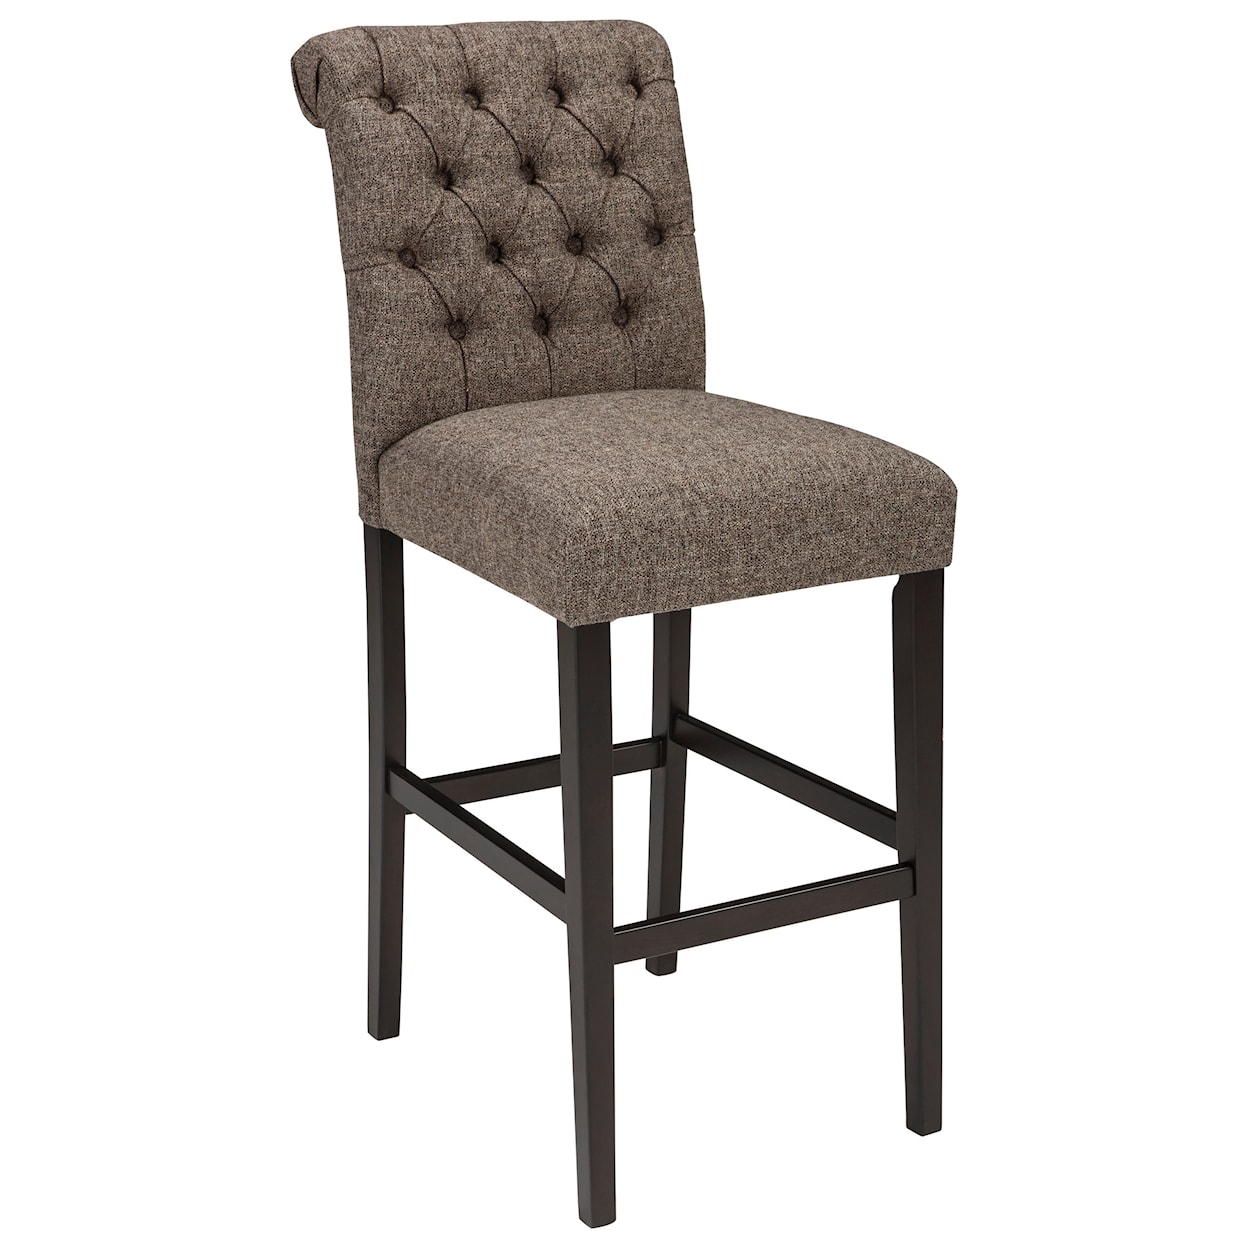 Ashley Furniture Signature Design Tripton Tall Upholstered Barstool